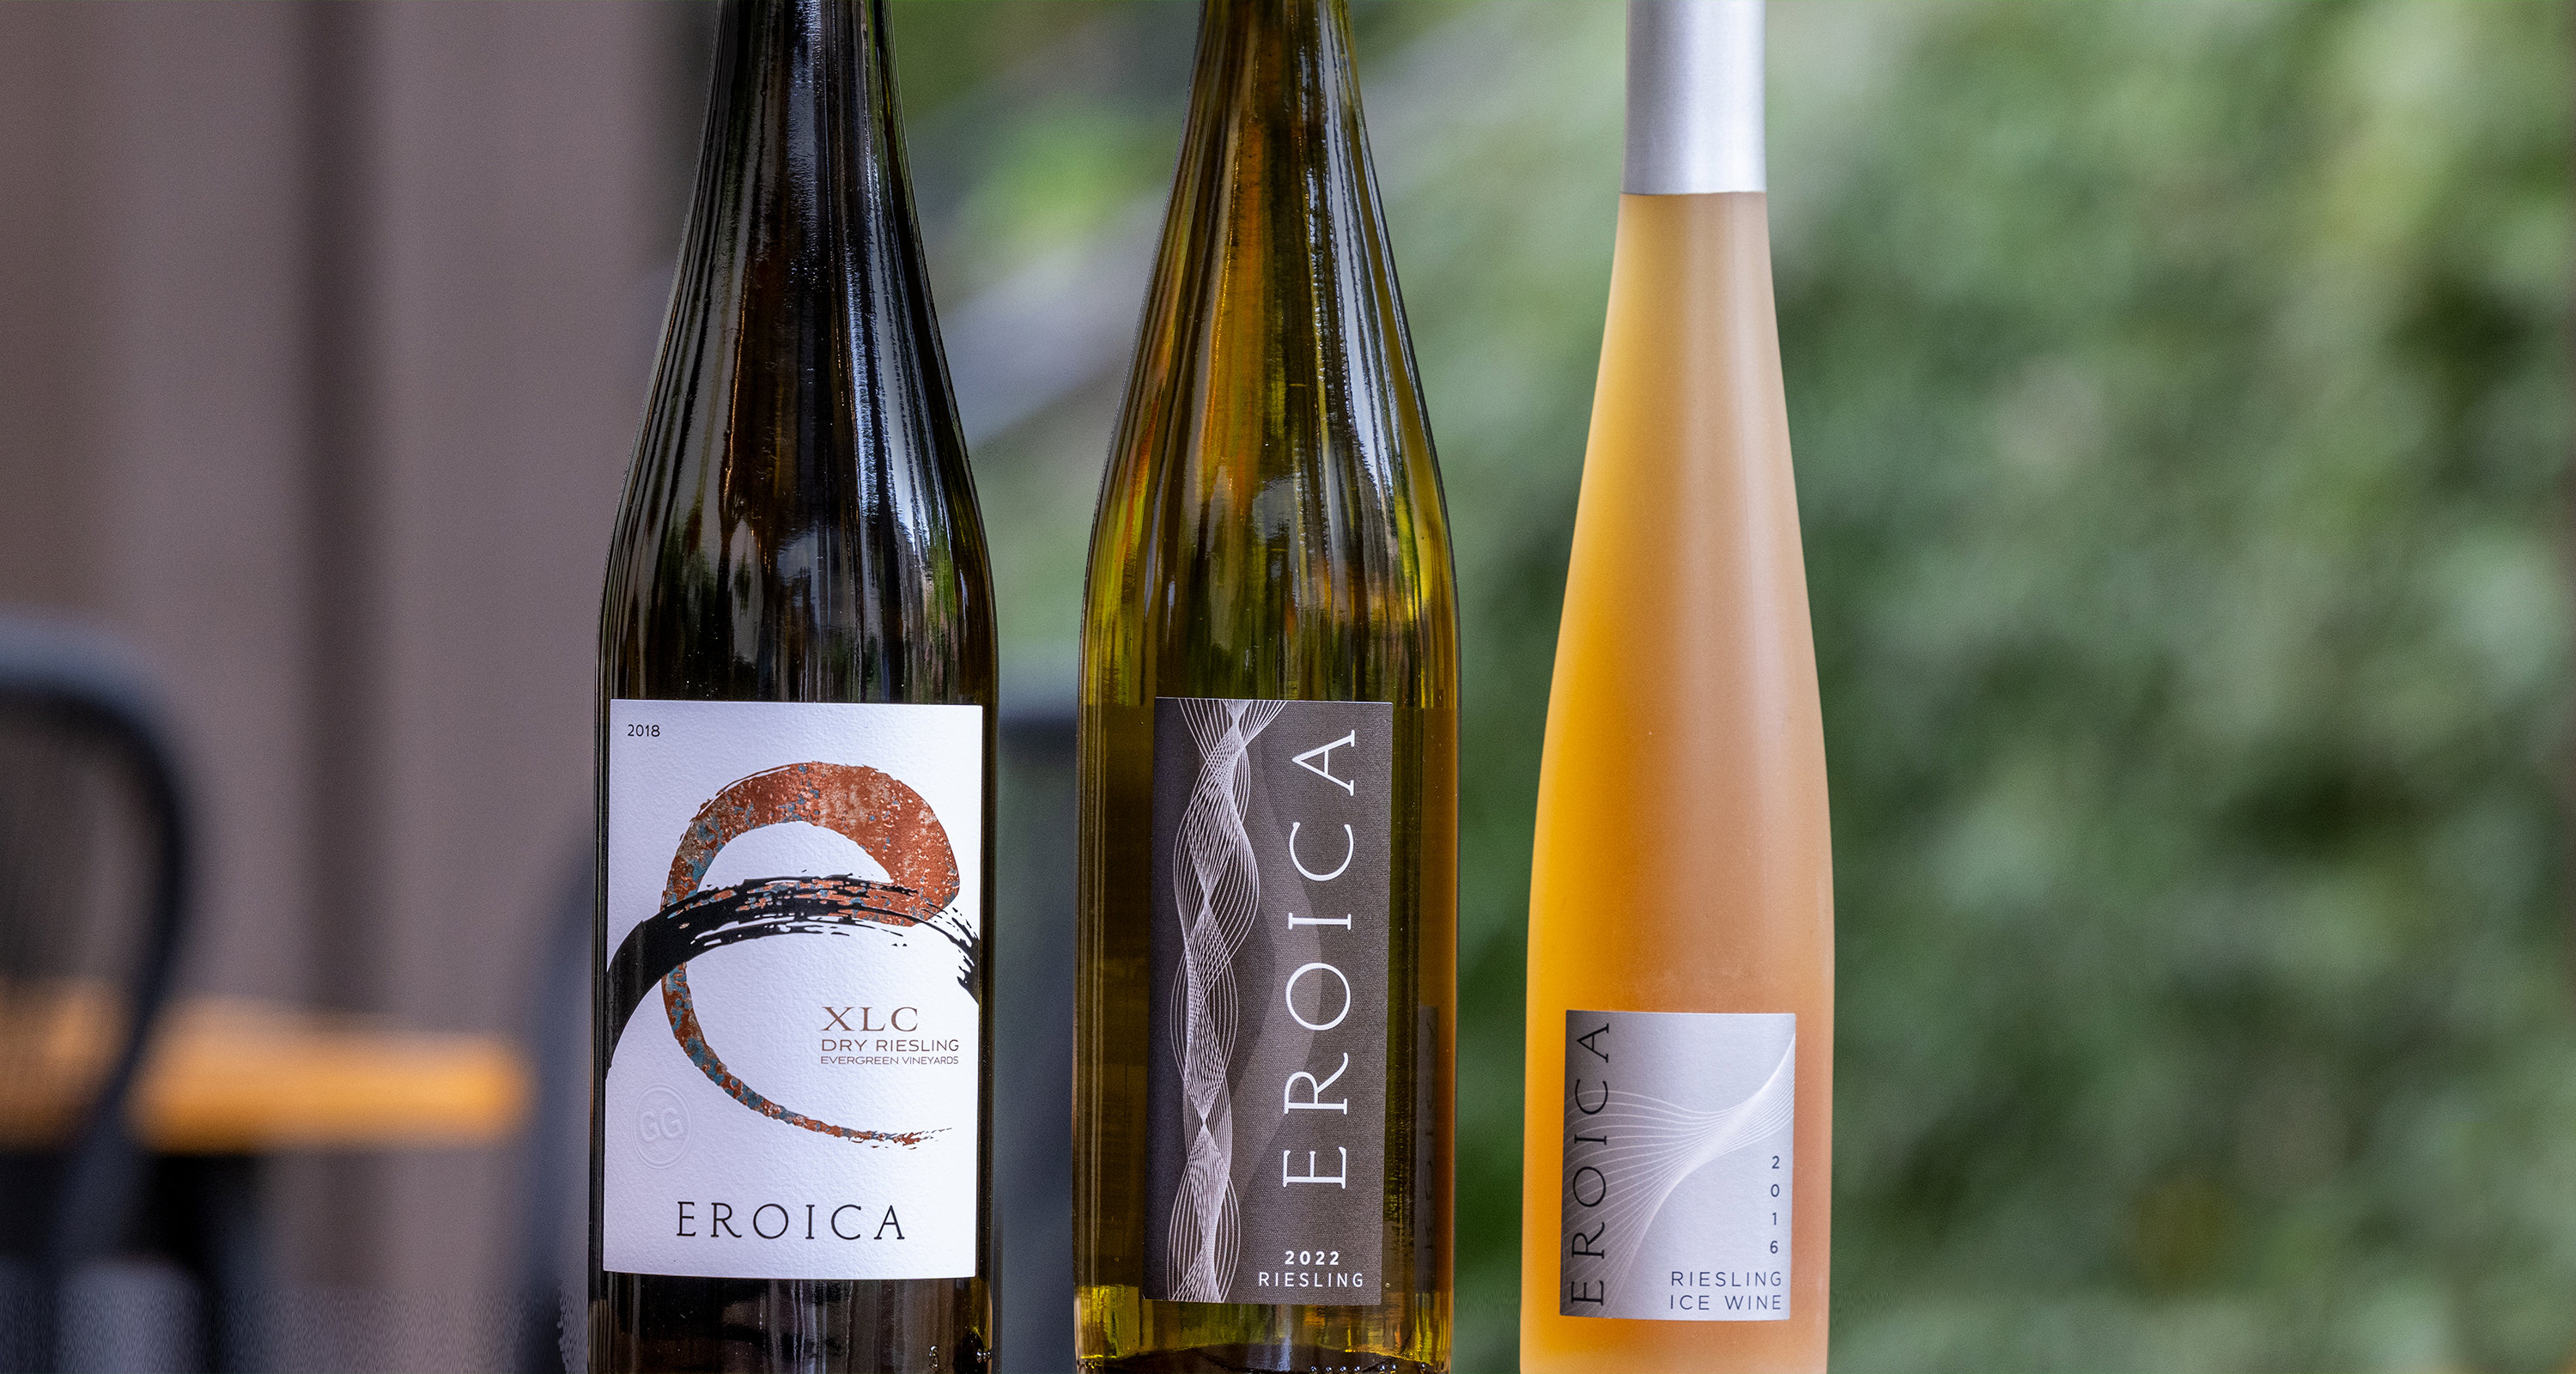 3 bottles of Eroica wine